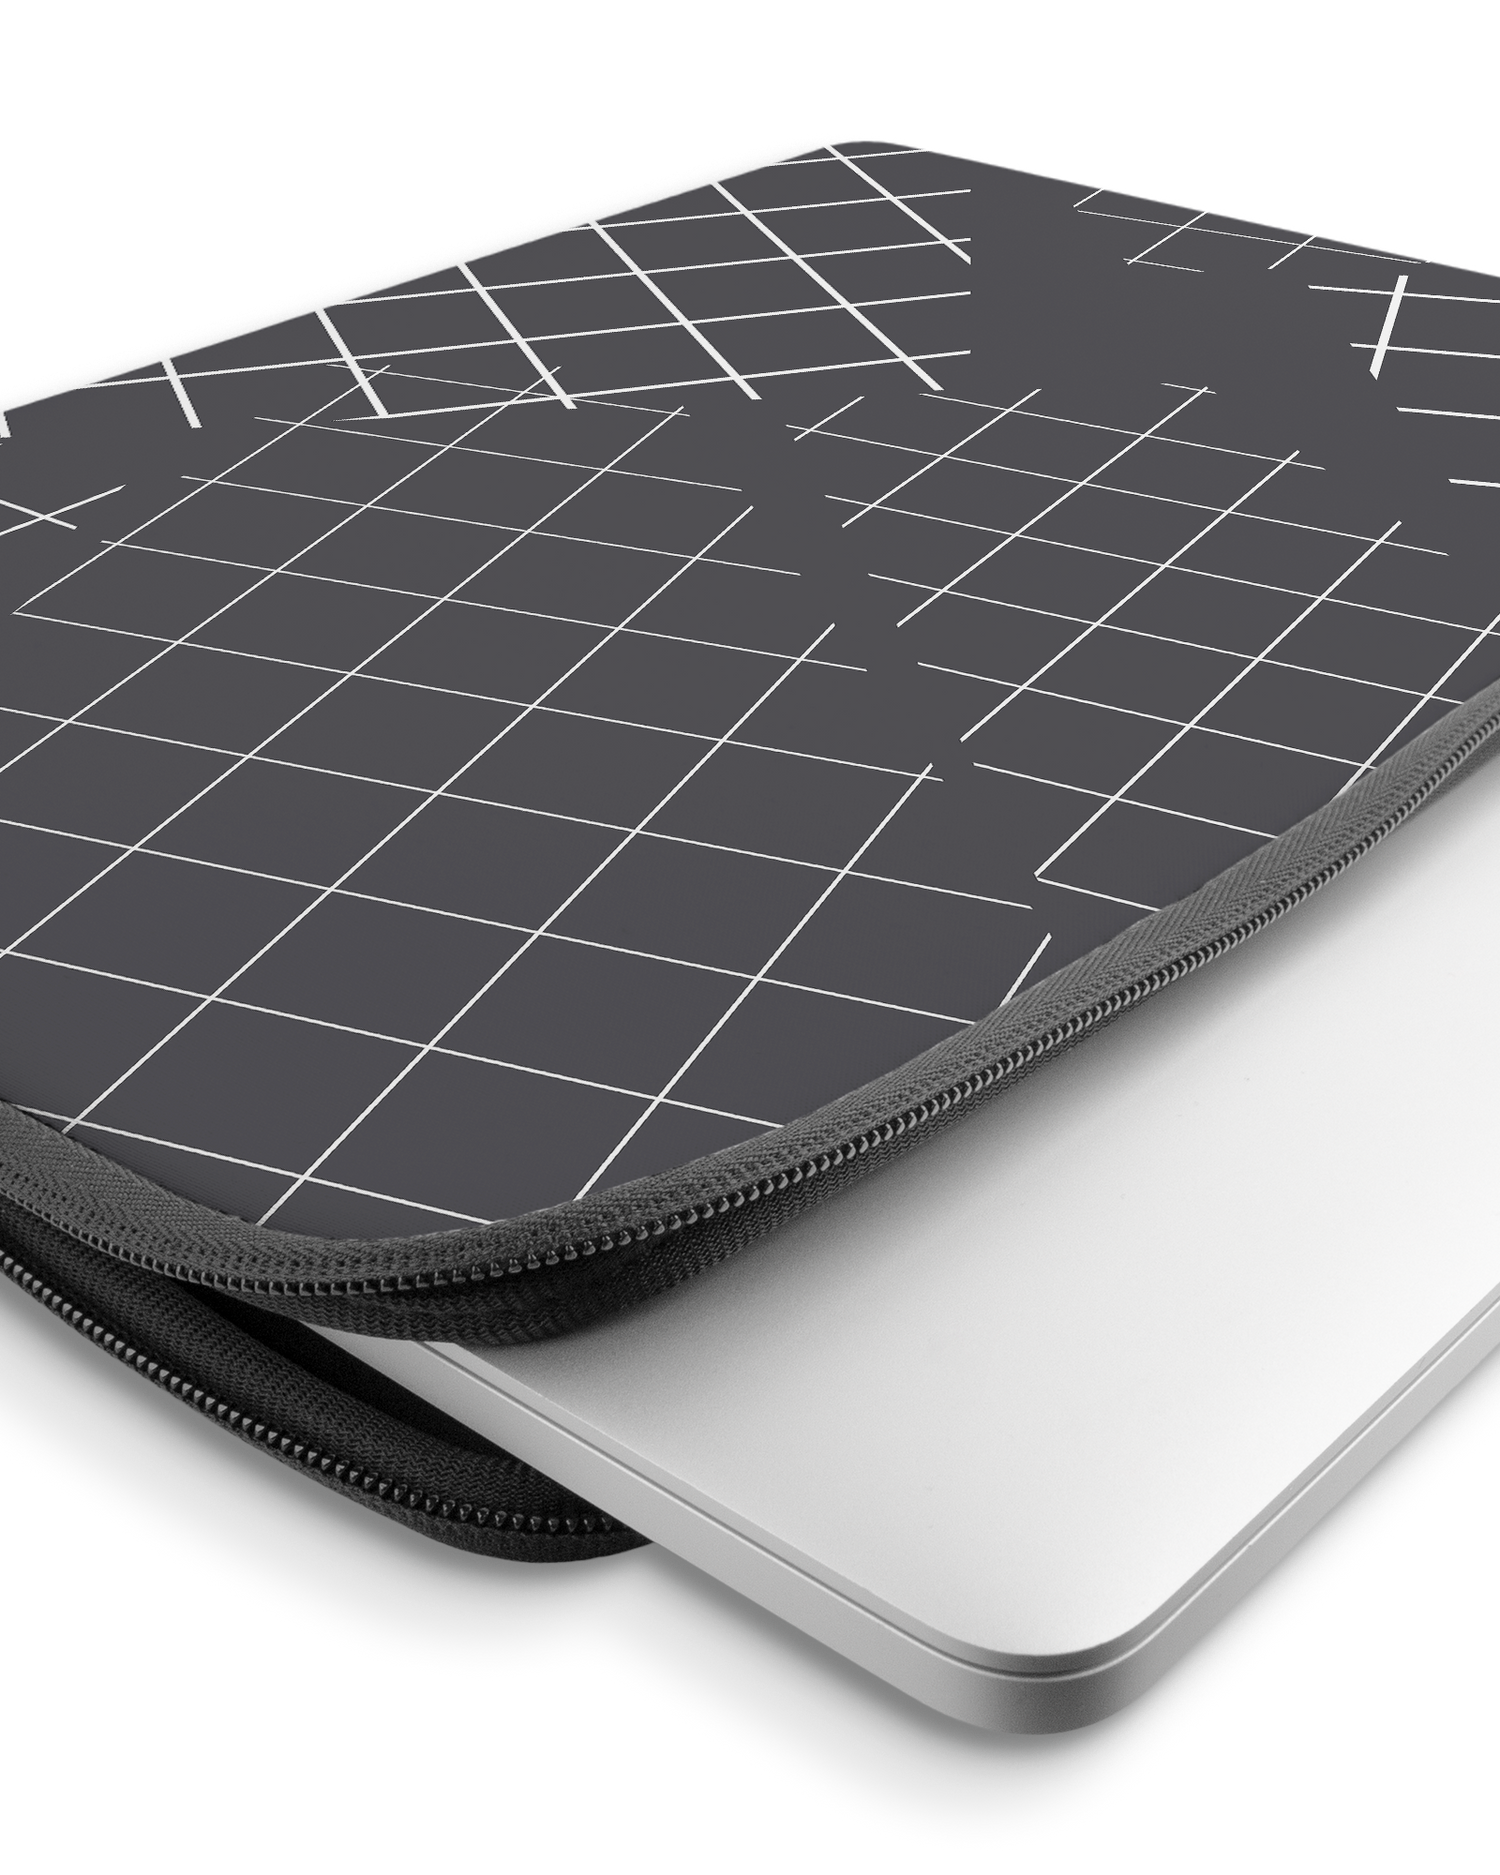 Grids Laptophülle 15-16 Zoll mit Gerät im Inneren